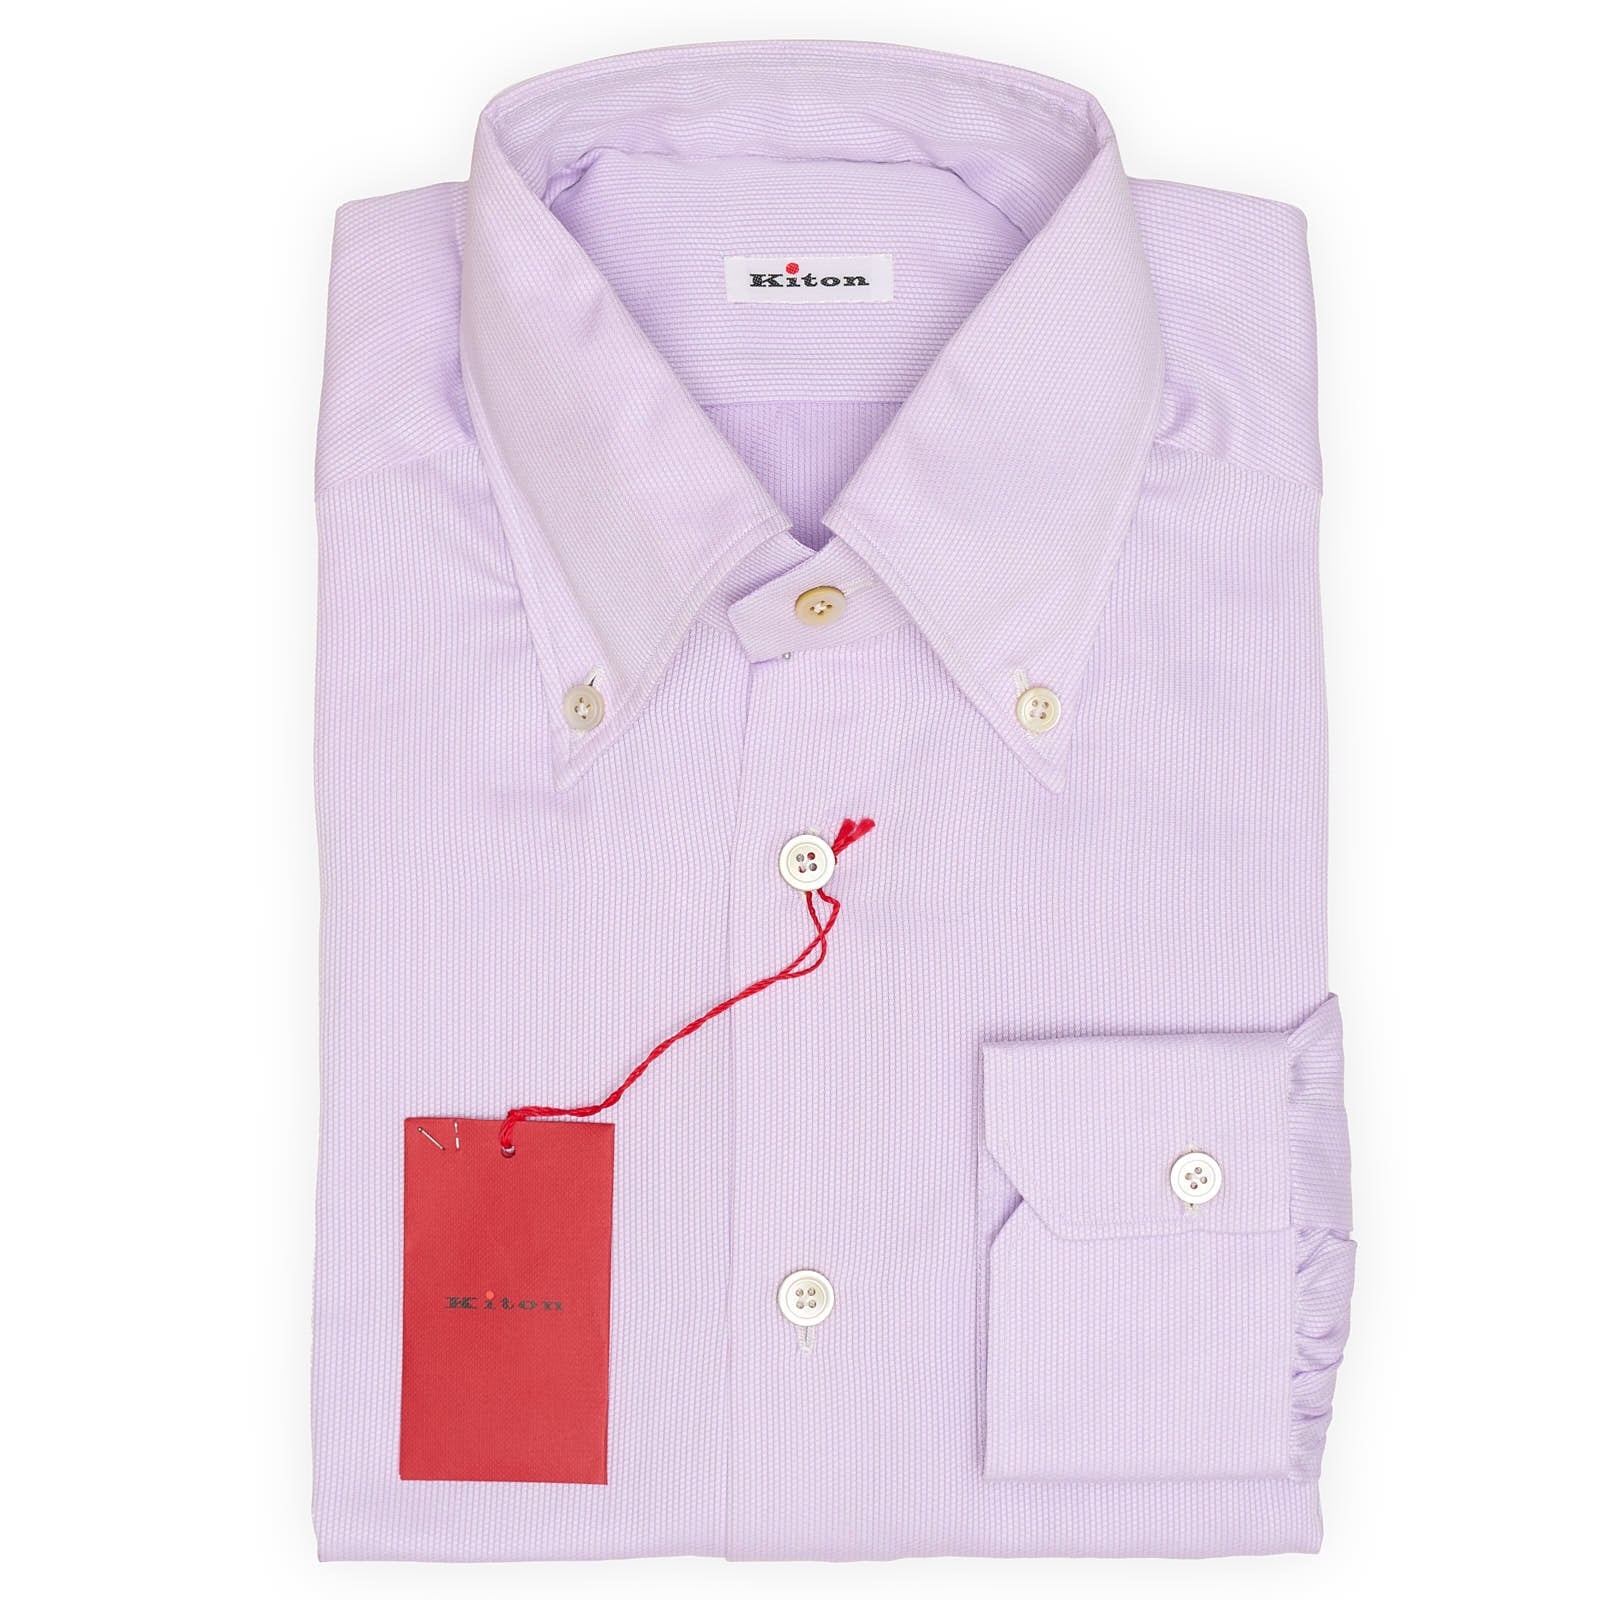 KITON Napoli Handmade Purple Cotton Button-Down Dress Shirt EU 39 NEW US 15.5